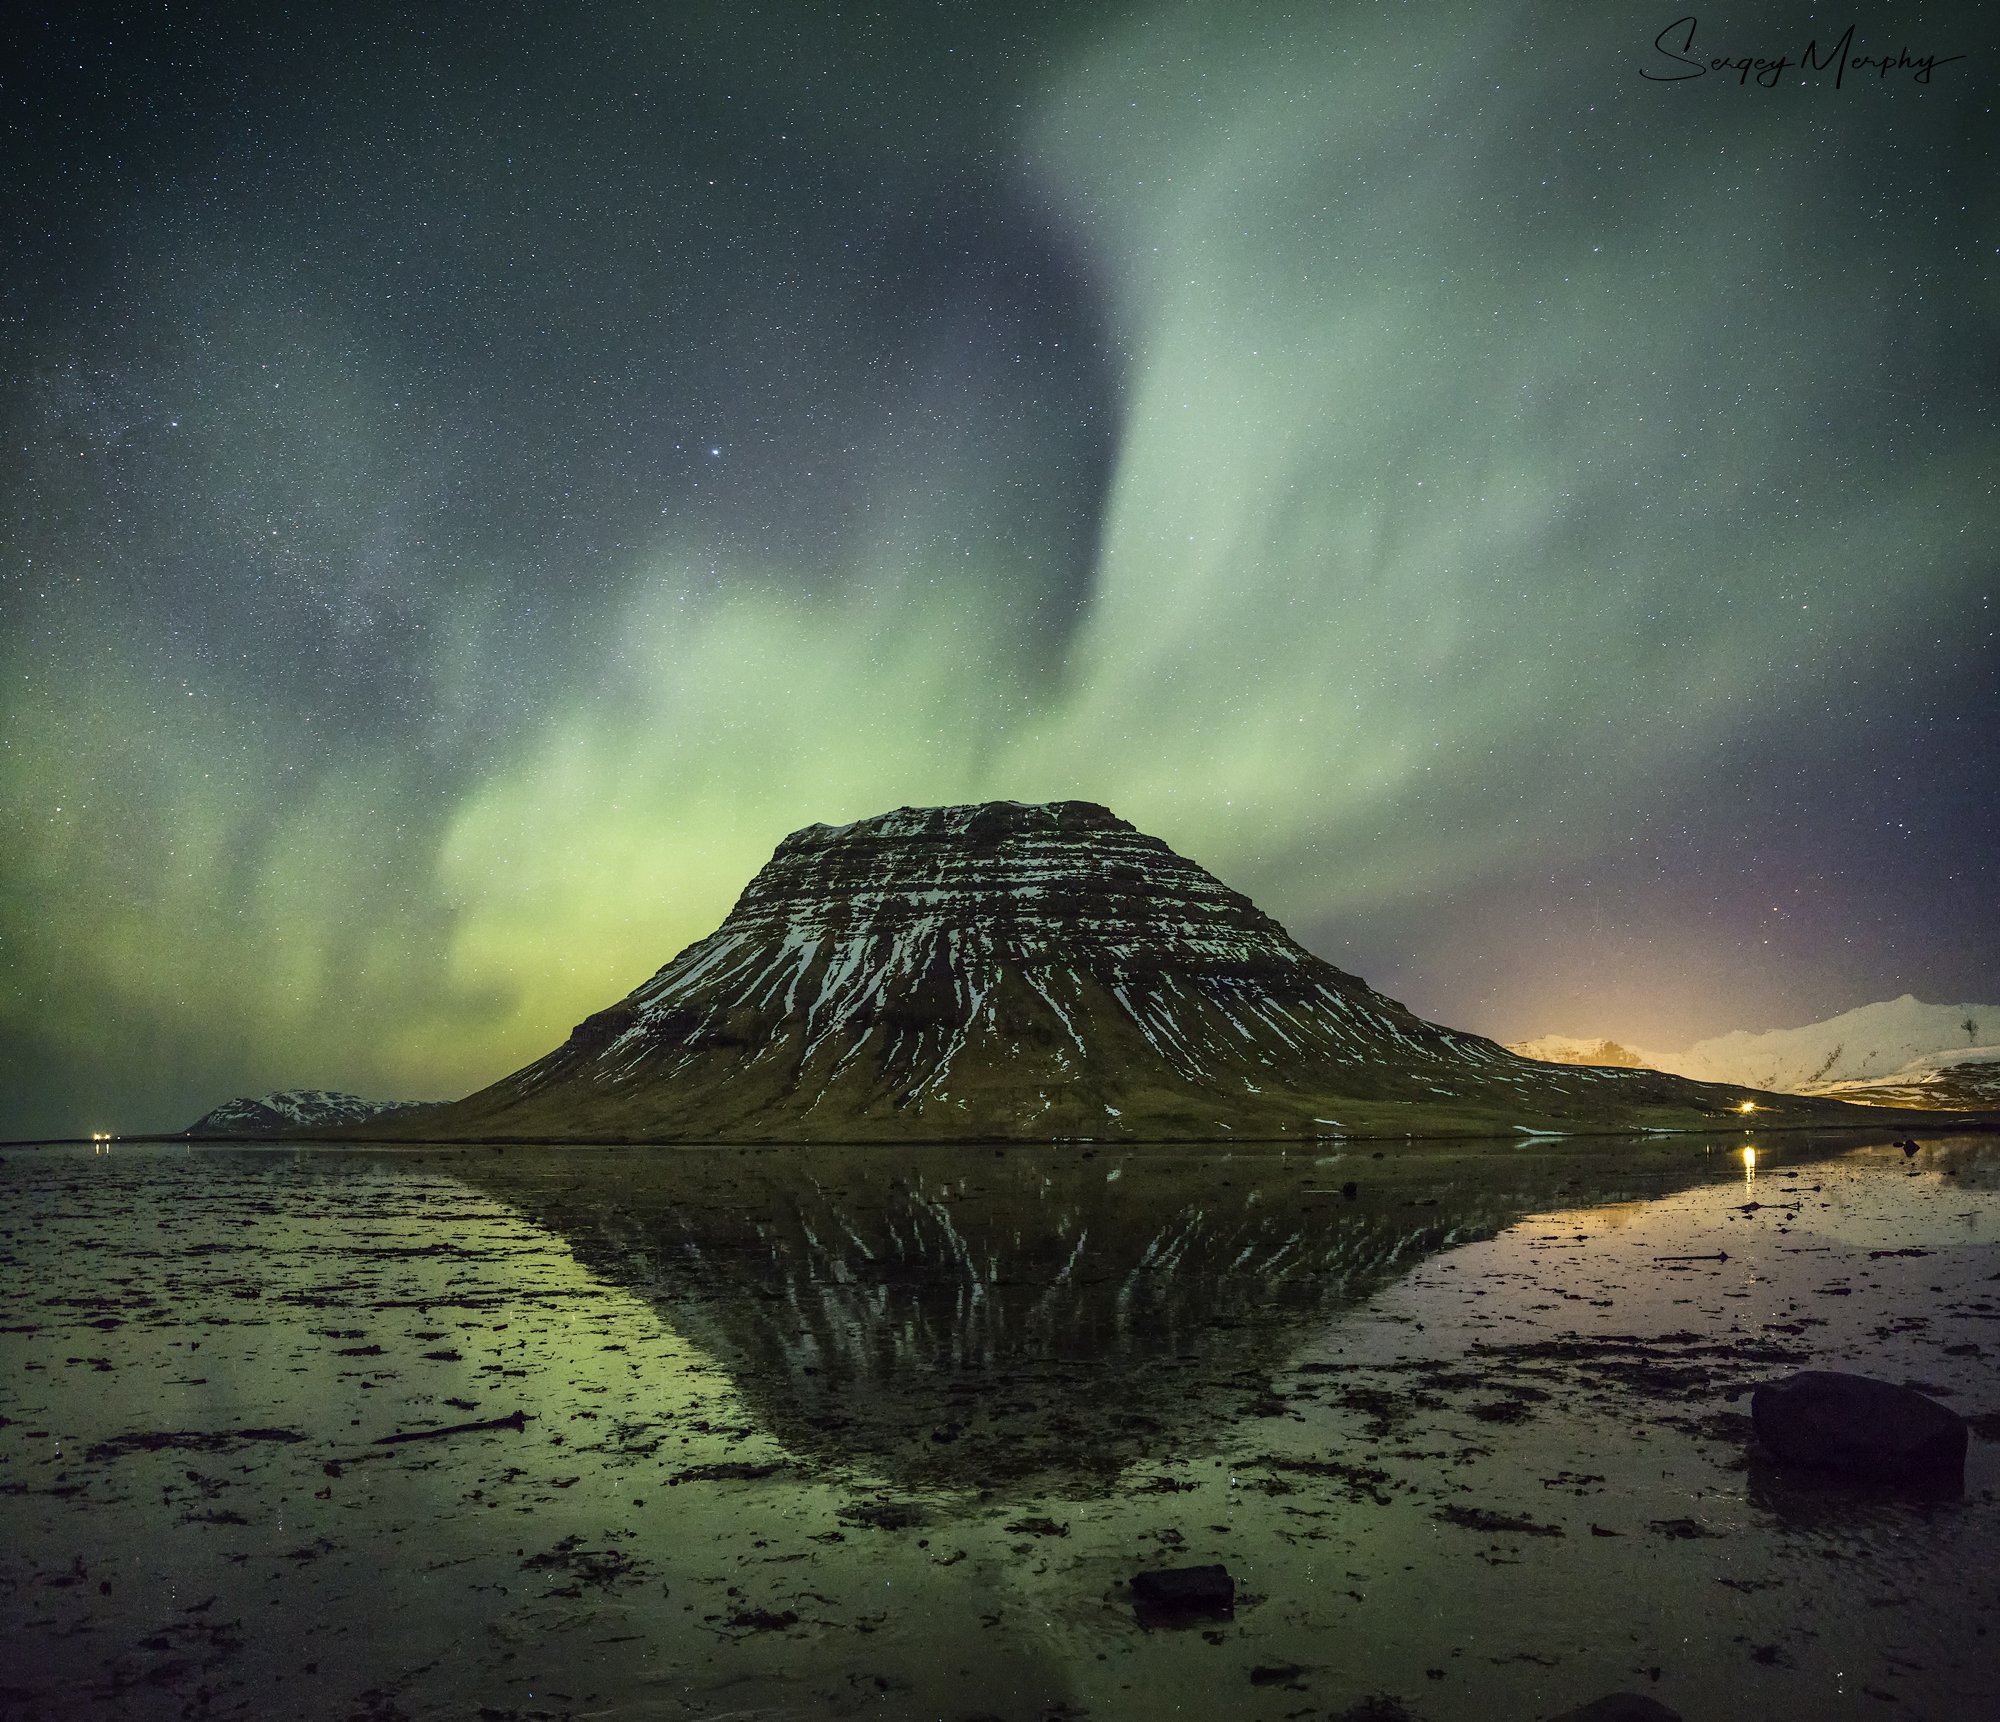 kirkjufell iceland northern lights, Sergey Merphy